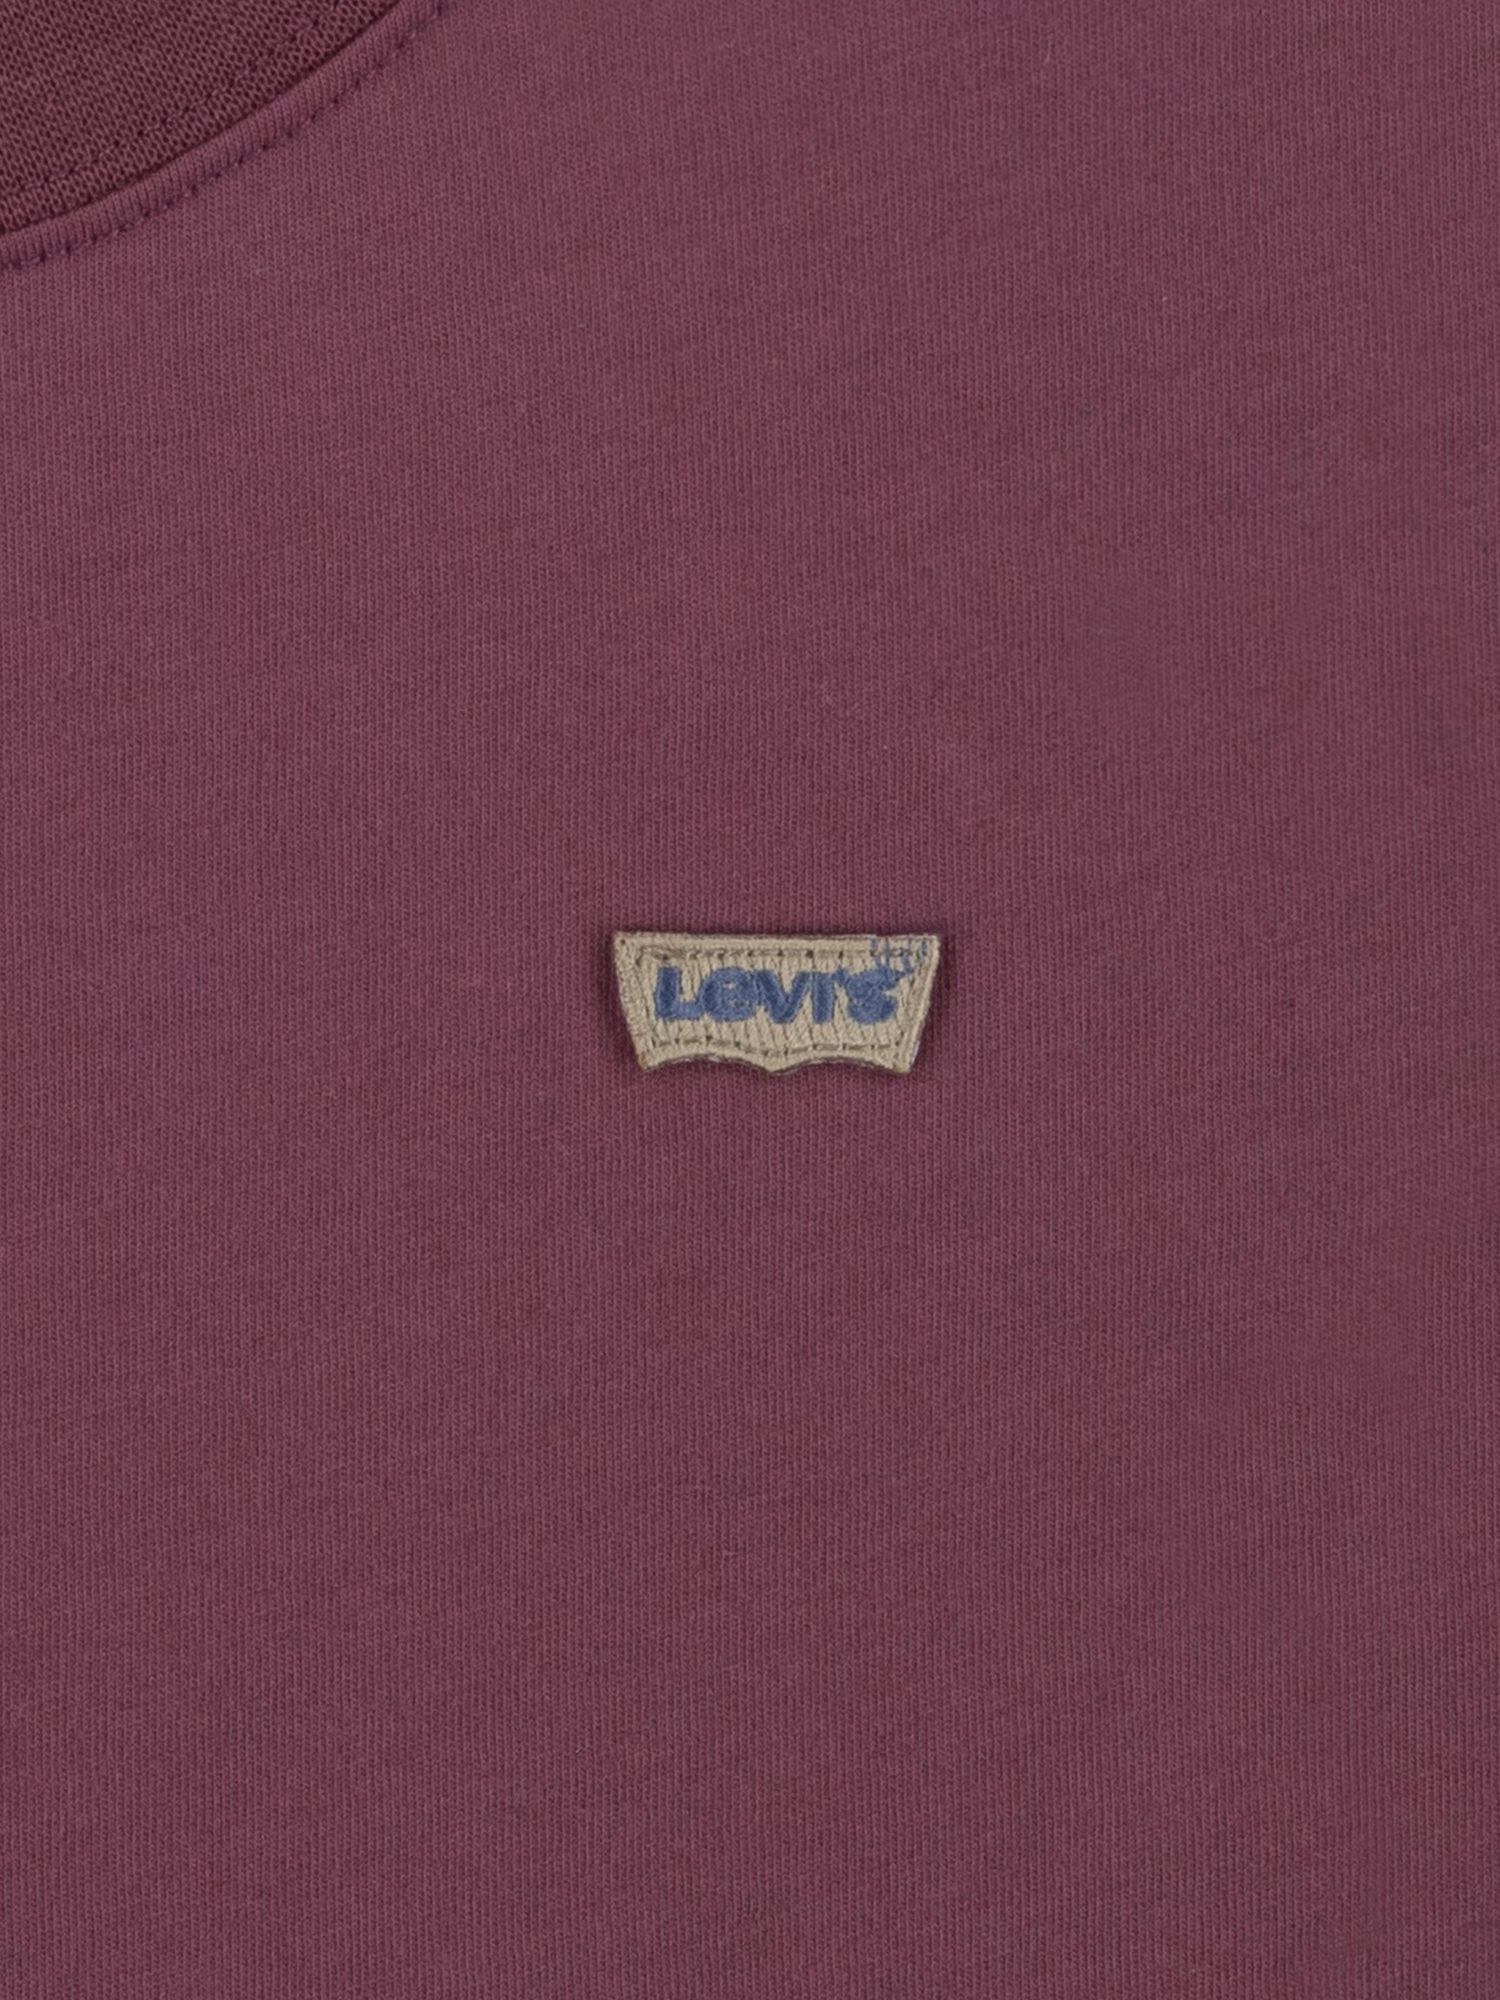 Levi's Kids' Hit Mini Batwing Logo Short Sleeve T-Shirt, Roan Rouge, 14 years